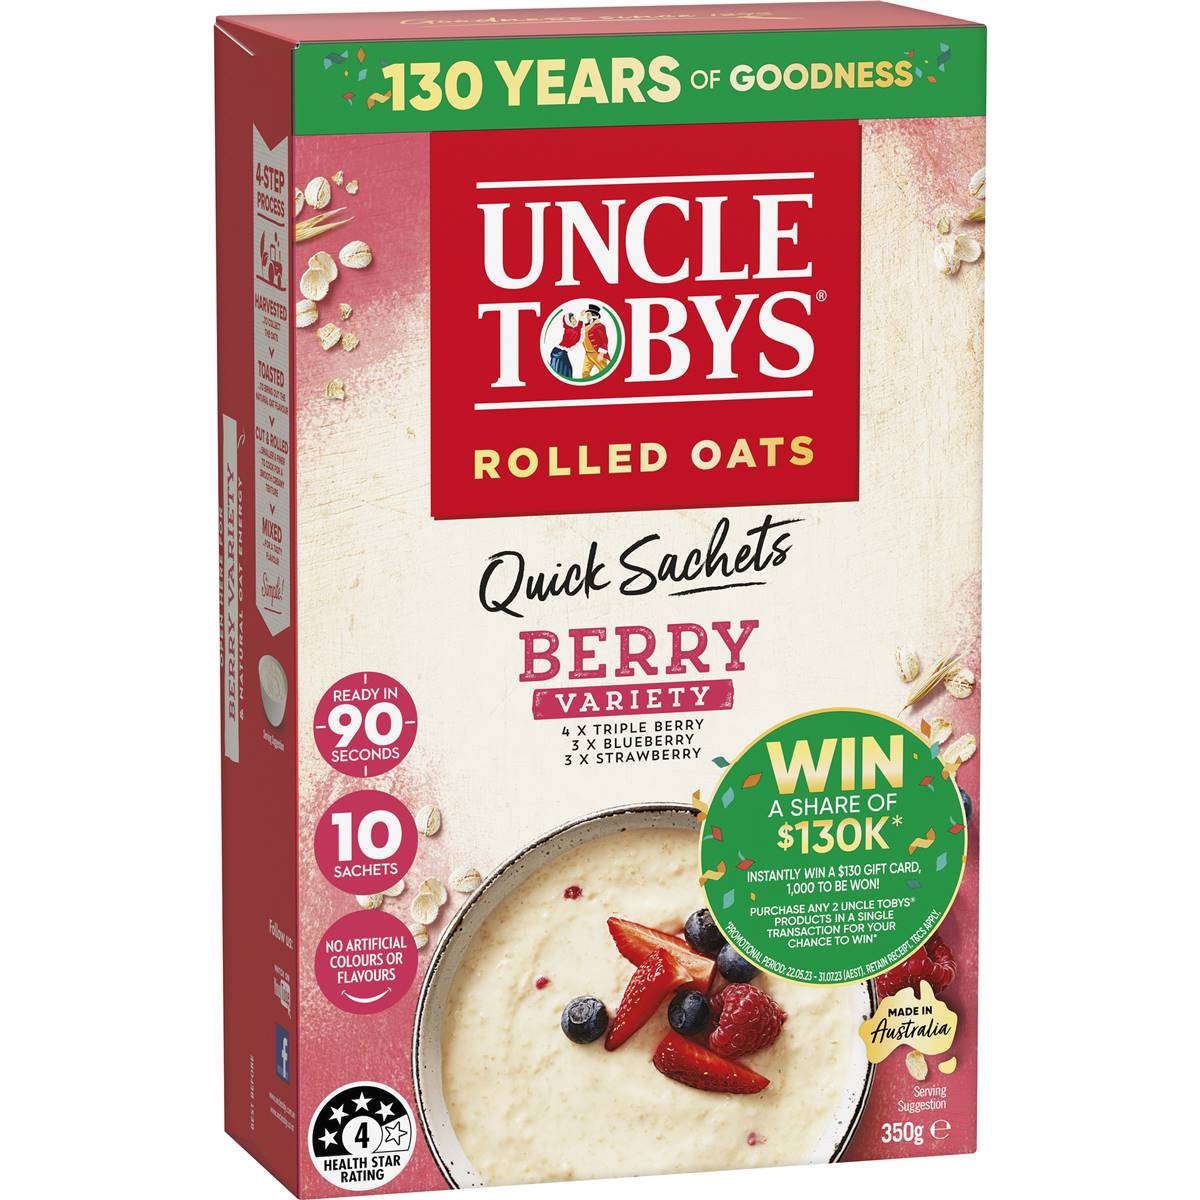 Calories in Uncle Tobys Oats Porridge Quick Sachets Berry Variety